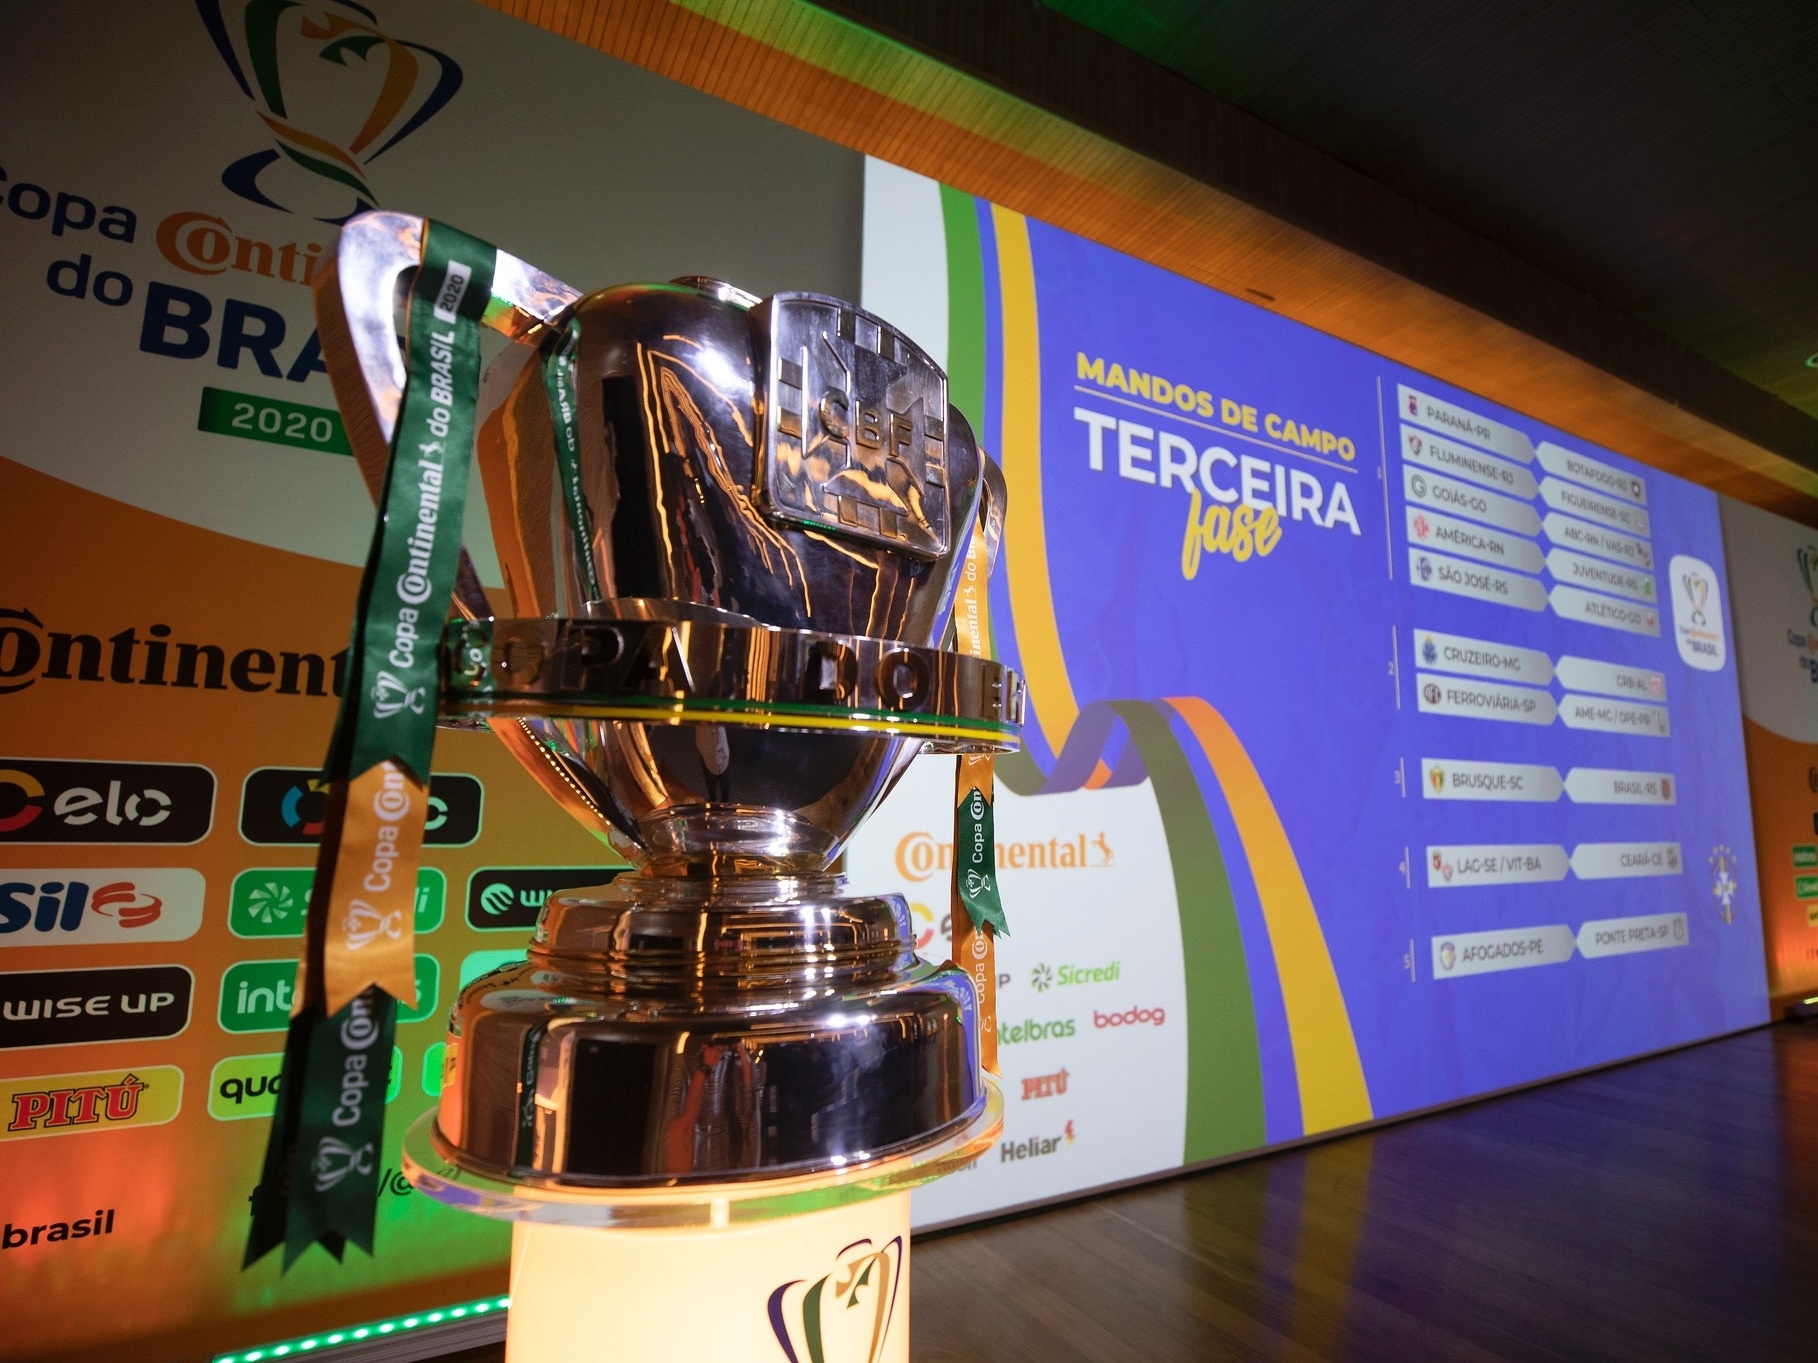 Confira os potes da 1ª fase da Copa Sul-Americana 2020; sorteio será nesta  3ª-feira